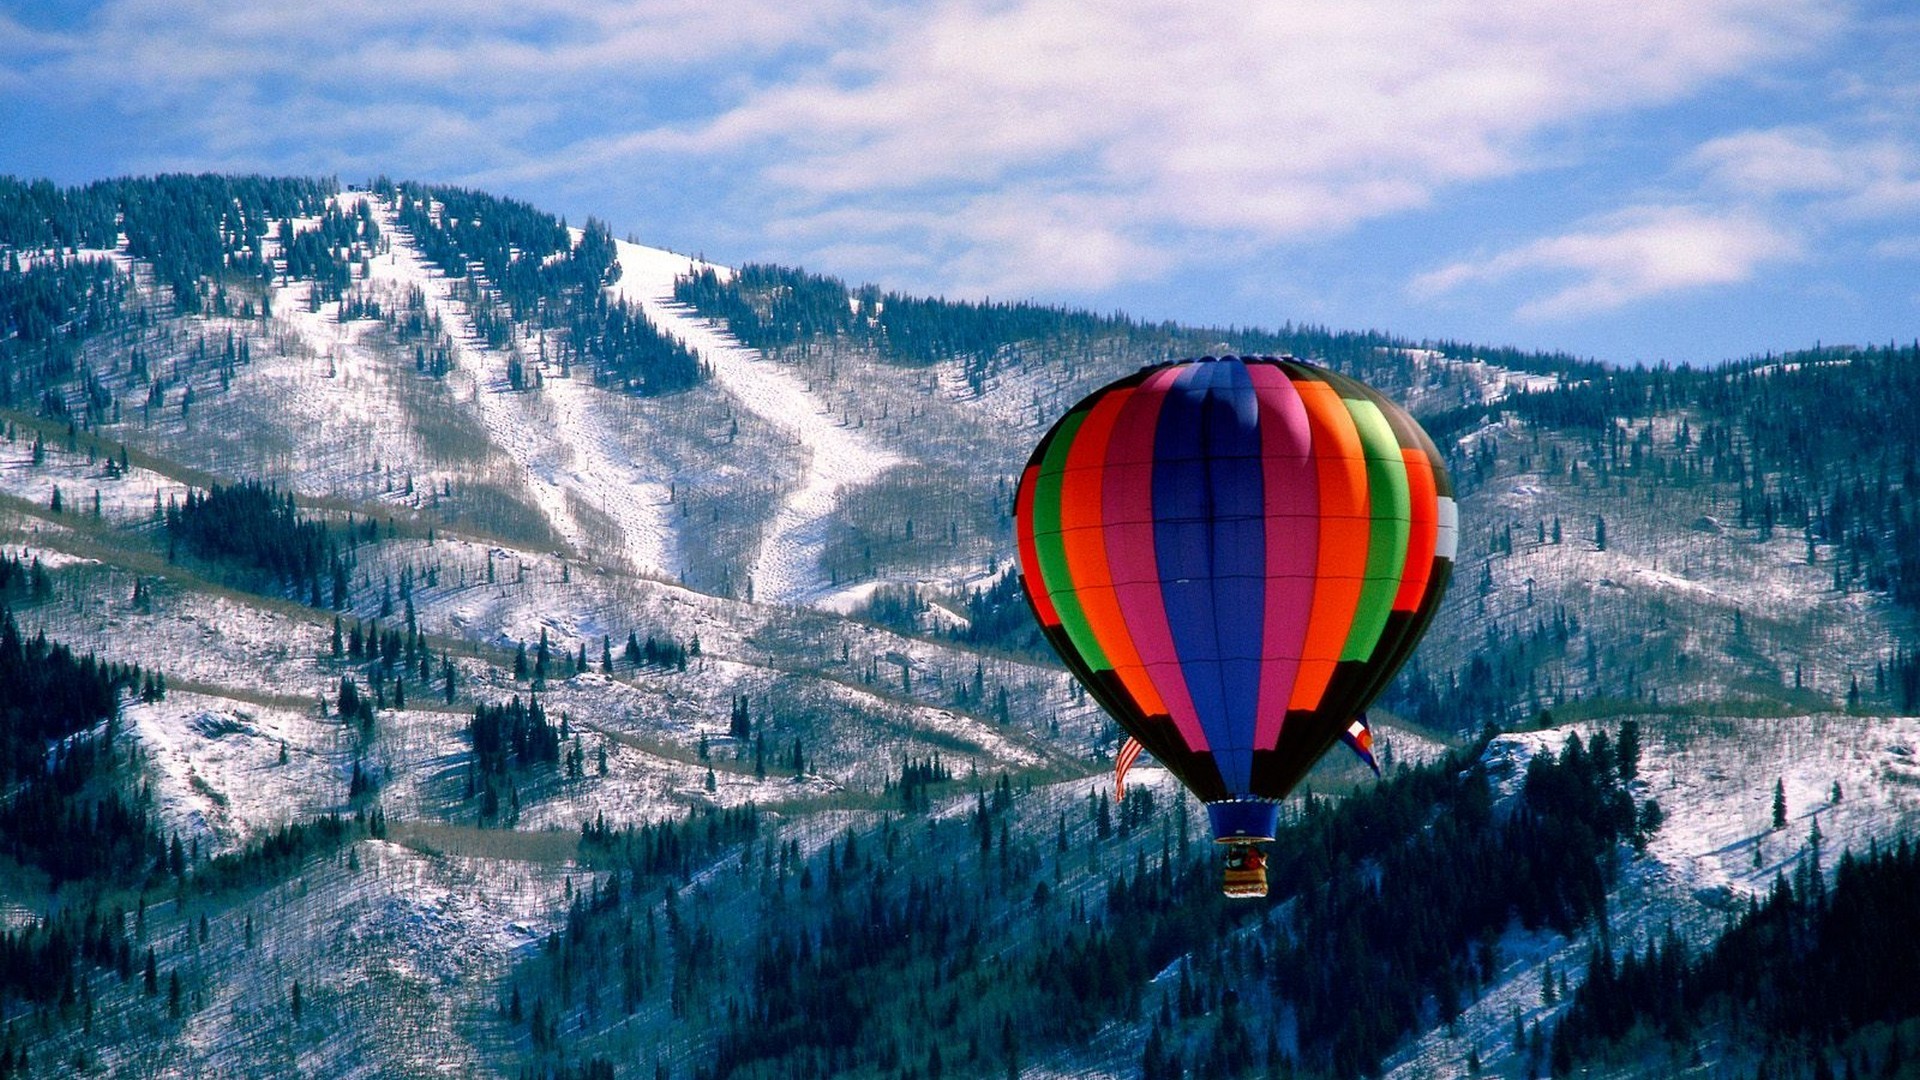 hot air balloons, snow landscapes - desktop wallpaper